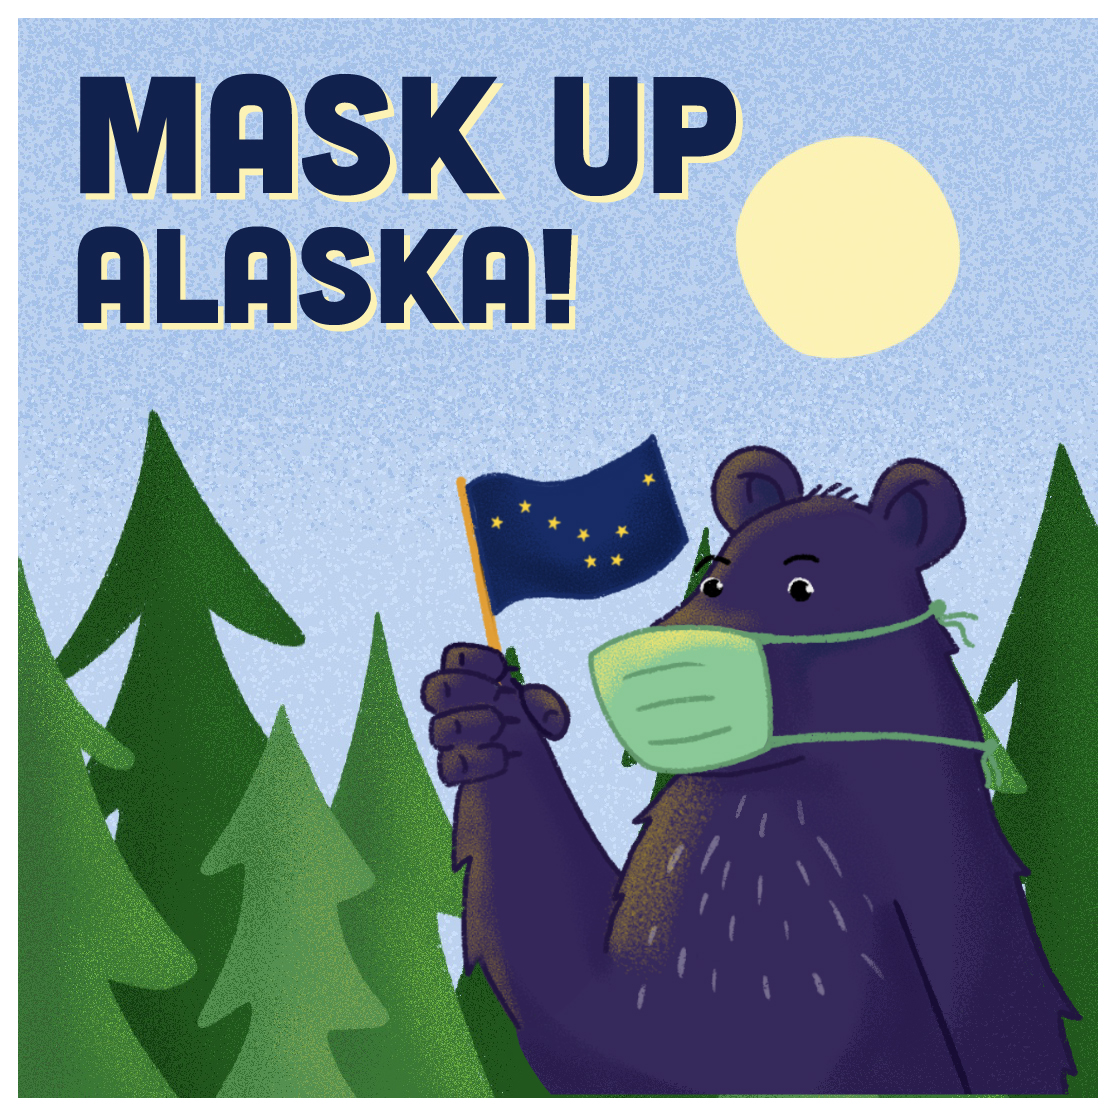 Mask up, Alaska!